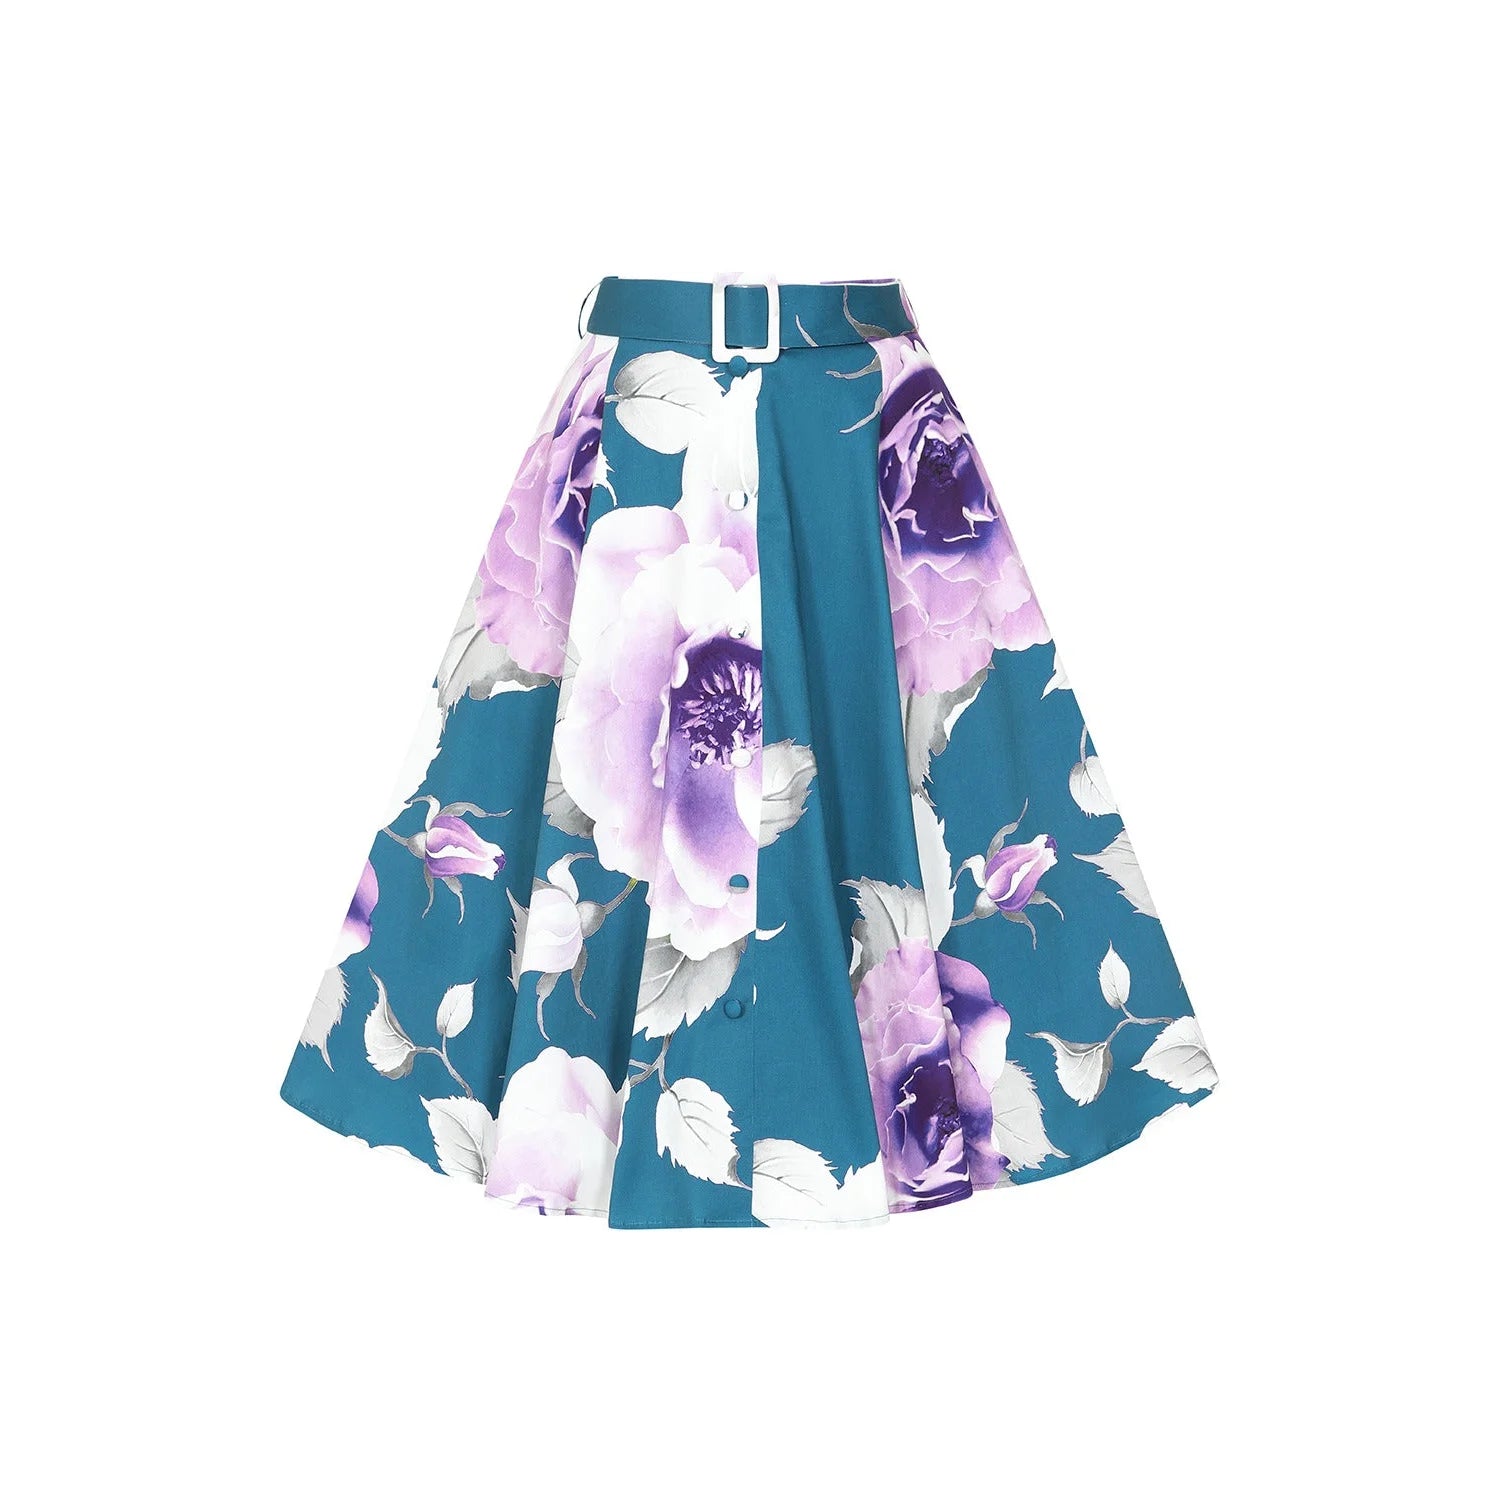 Teal Floral Rockabilly Swing Skirt